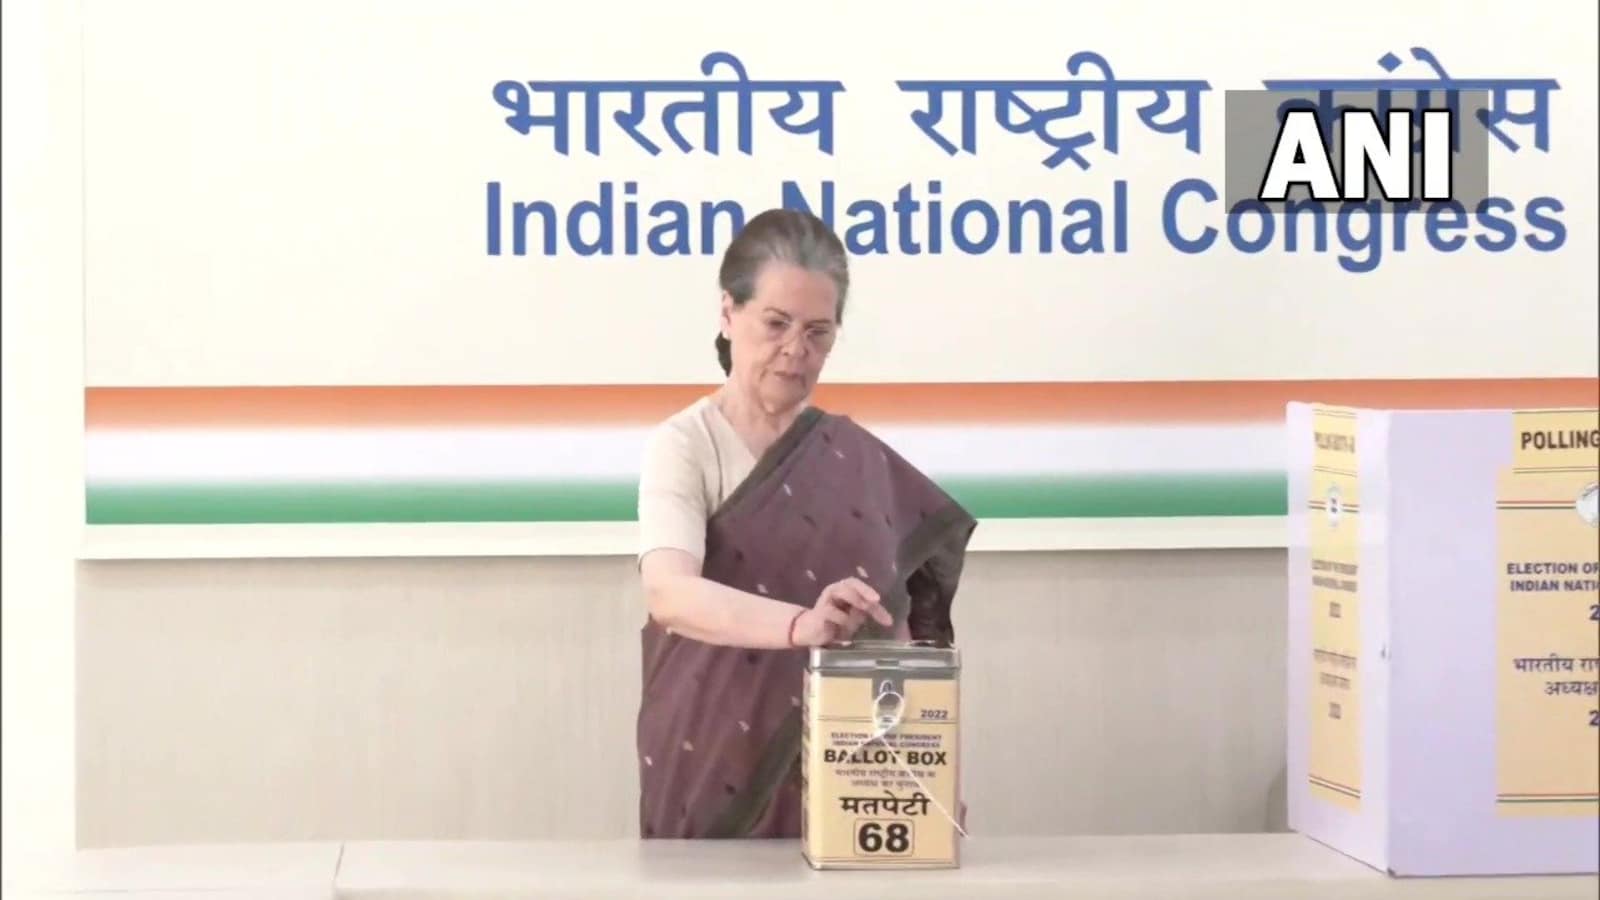 Sonia Gandhi casts vote in Cong Prez polls